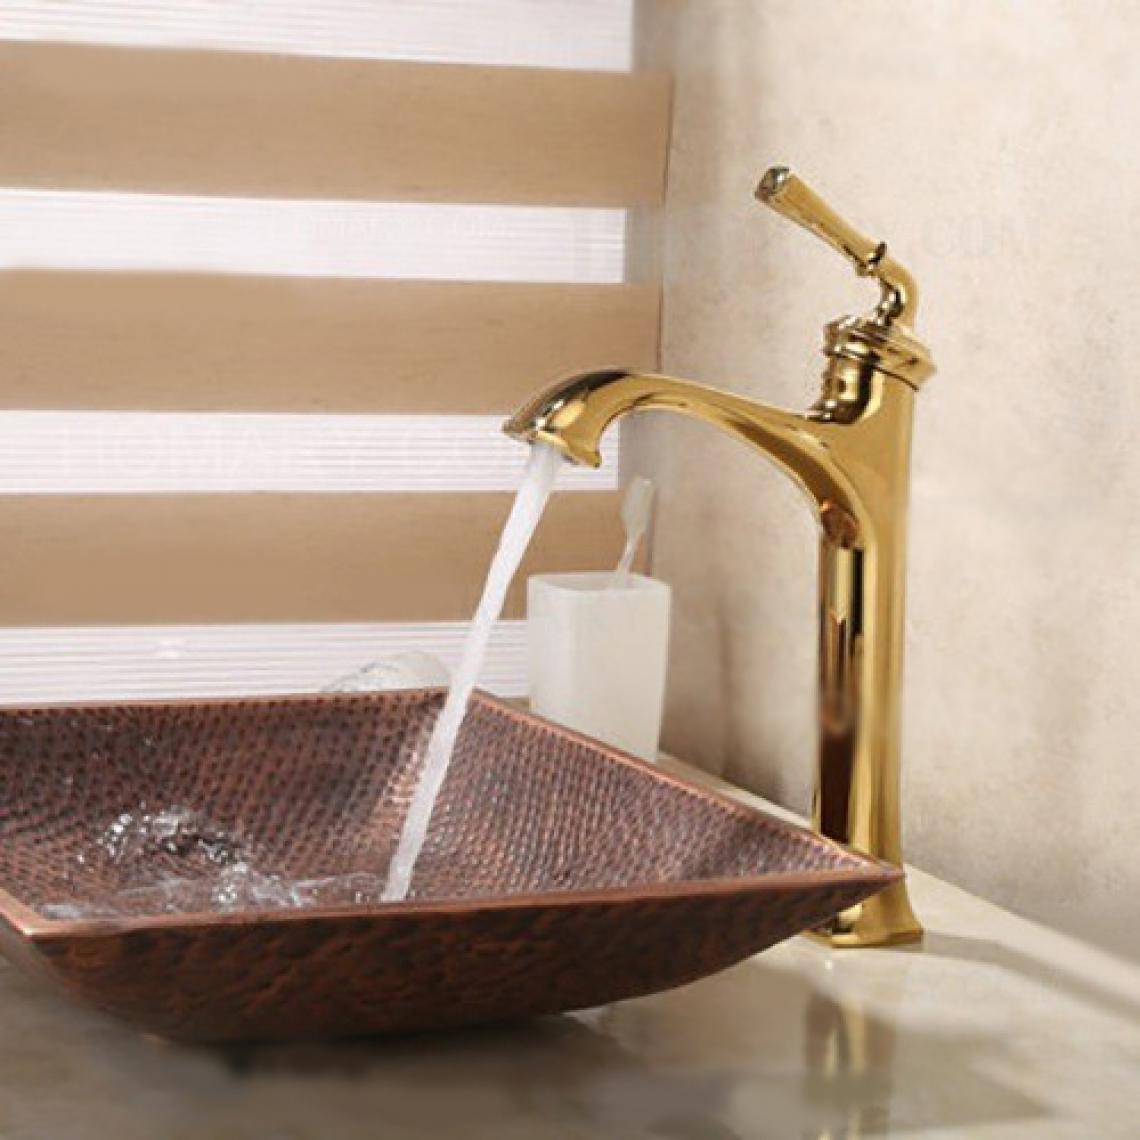 Kroos - Robinet lavabo mitigeur style vintage en laiton solide doré - Robinet de lavabo